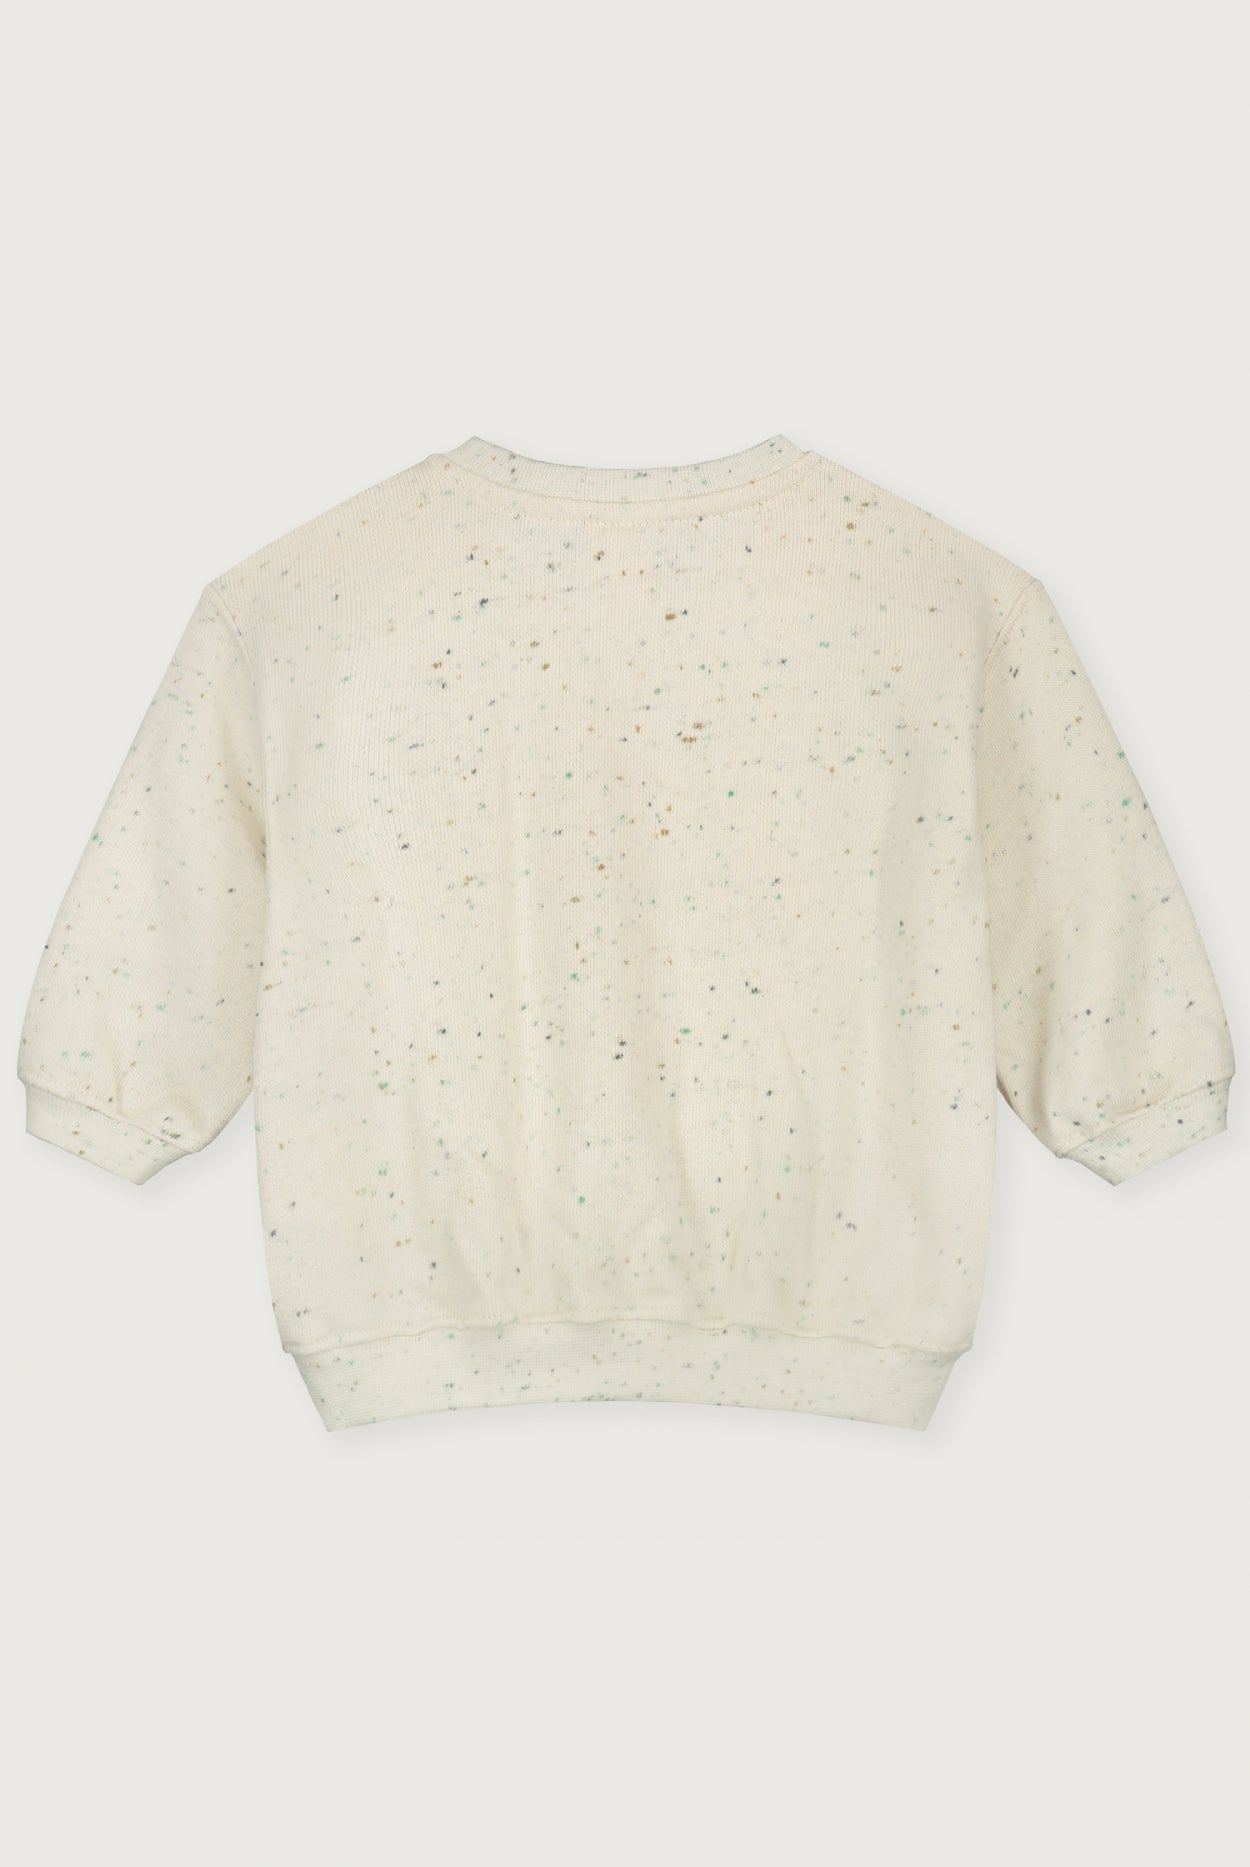 Baby Dropped Shoulder Sweater | Sprinkles